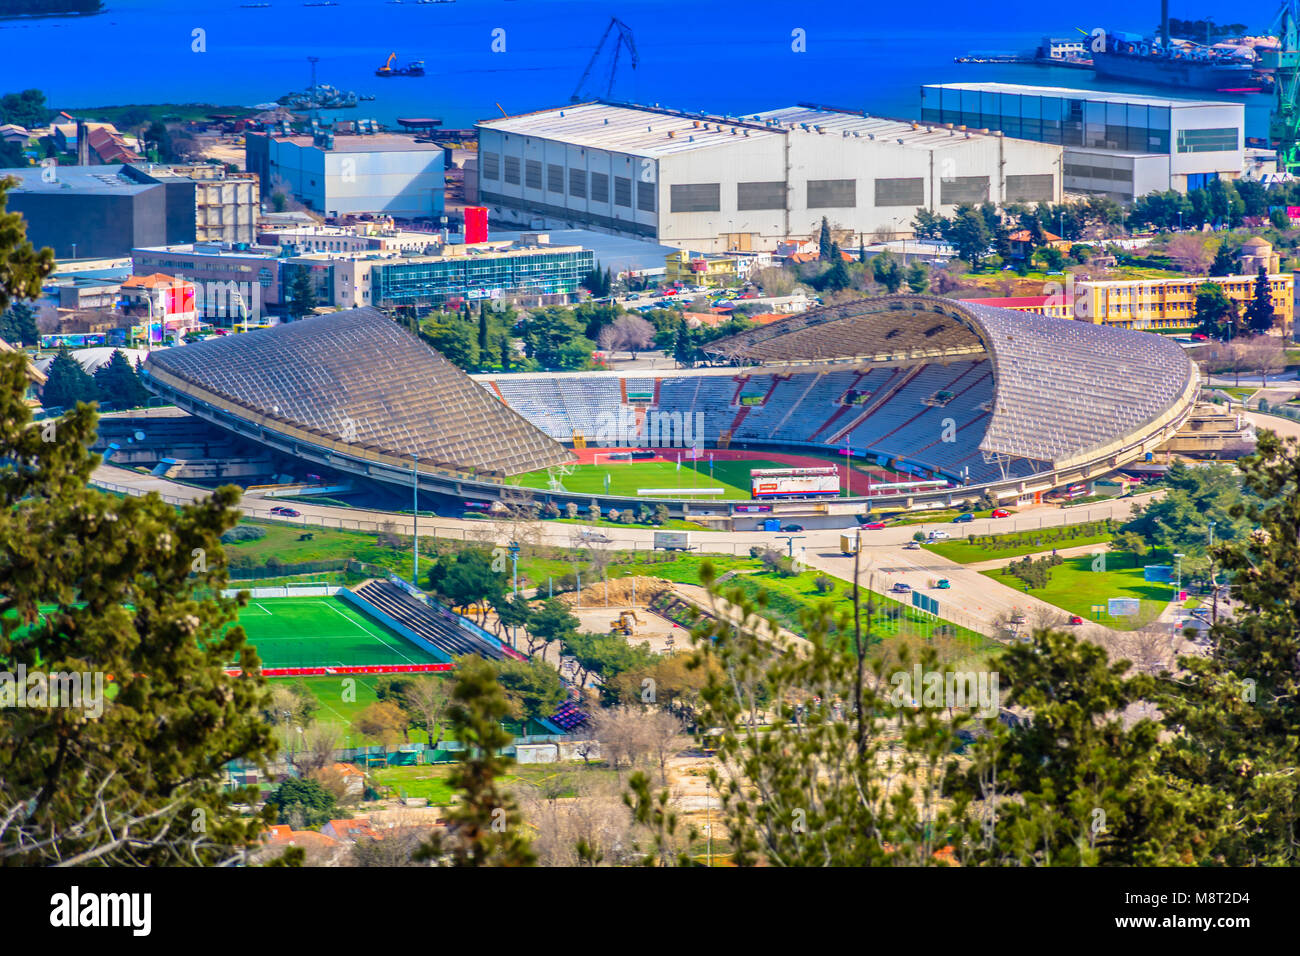 Football match ticket, Hajduk Split vs Rijeka, Stadion Poljud, Split,  Dalmatia, Croatia Stock Photo - Alamy